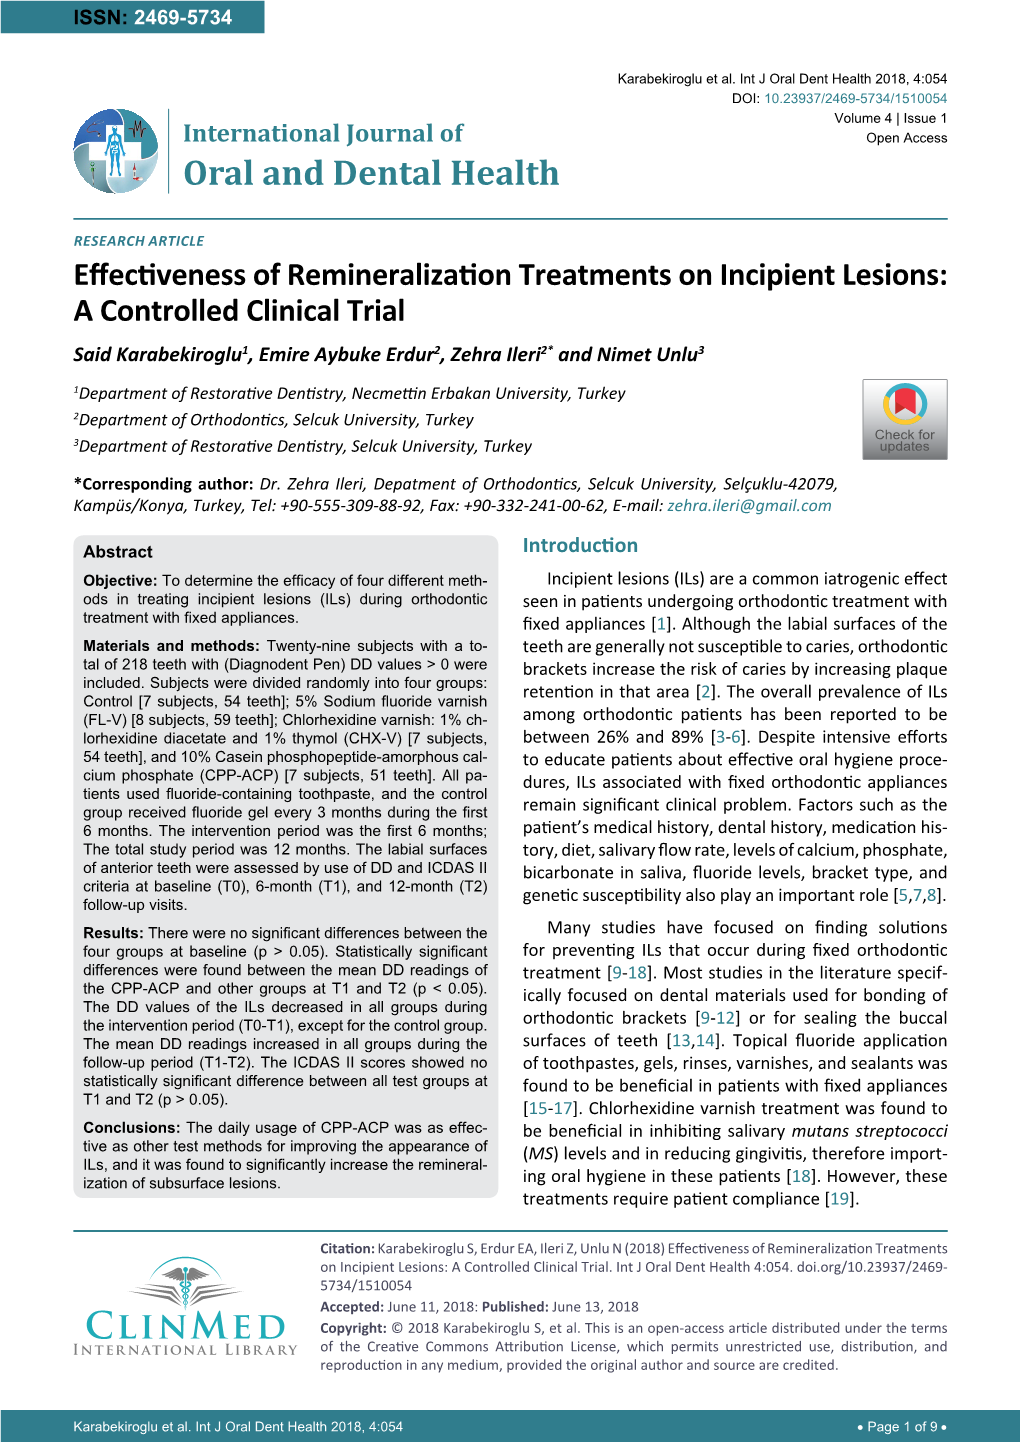 Effectiveness of Remineralization Treatments on Incipient Lesions: a Controlled Clinical Trial Said Karabekiroglu1, Emire Aybuke Erdur2, Zehra Ileri2* and Nimet Unlu3